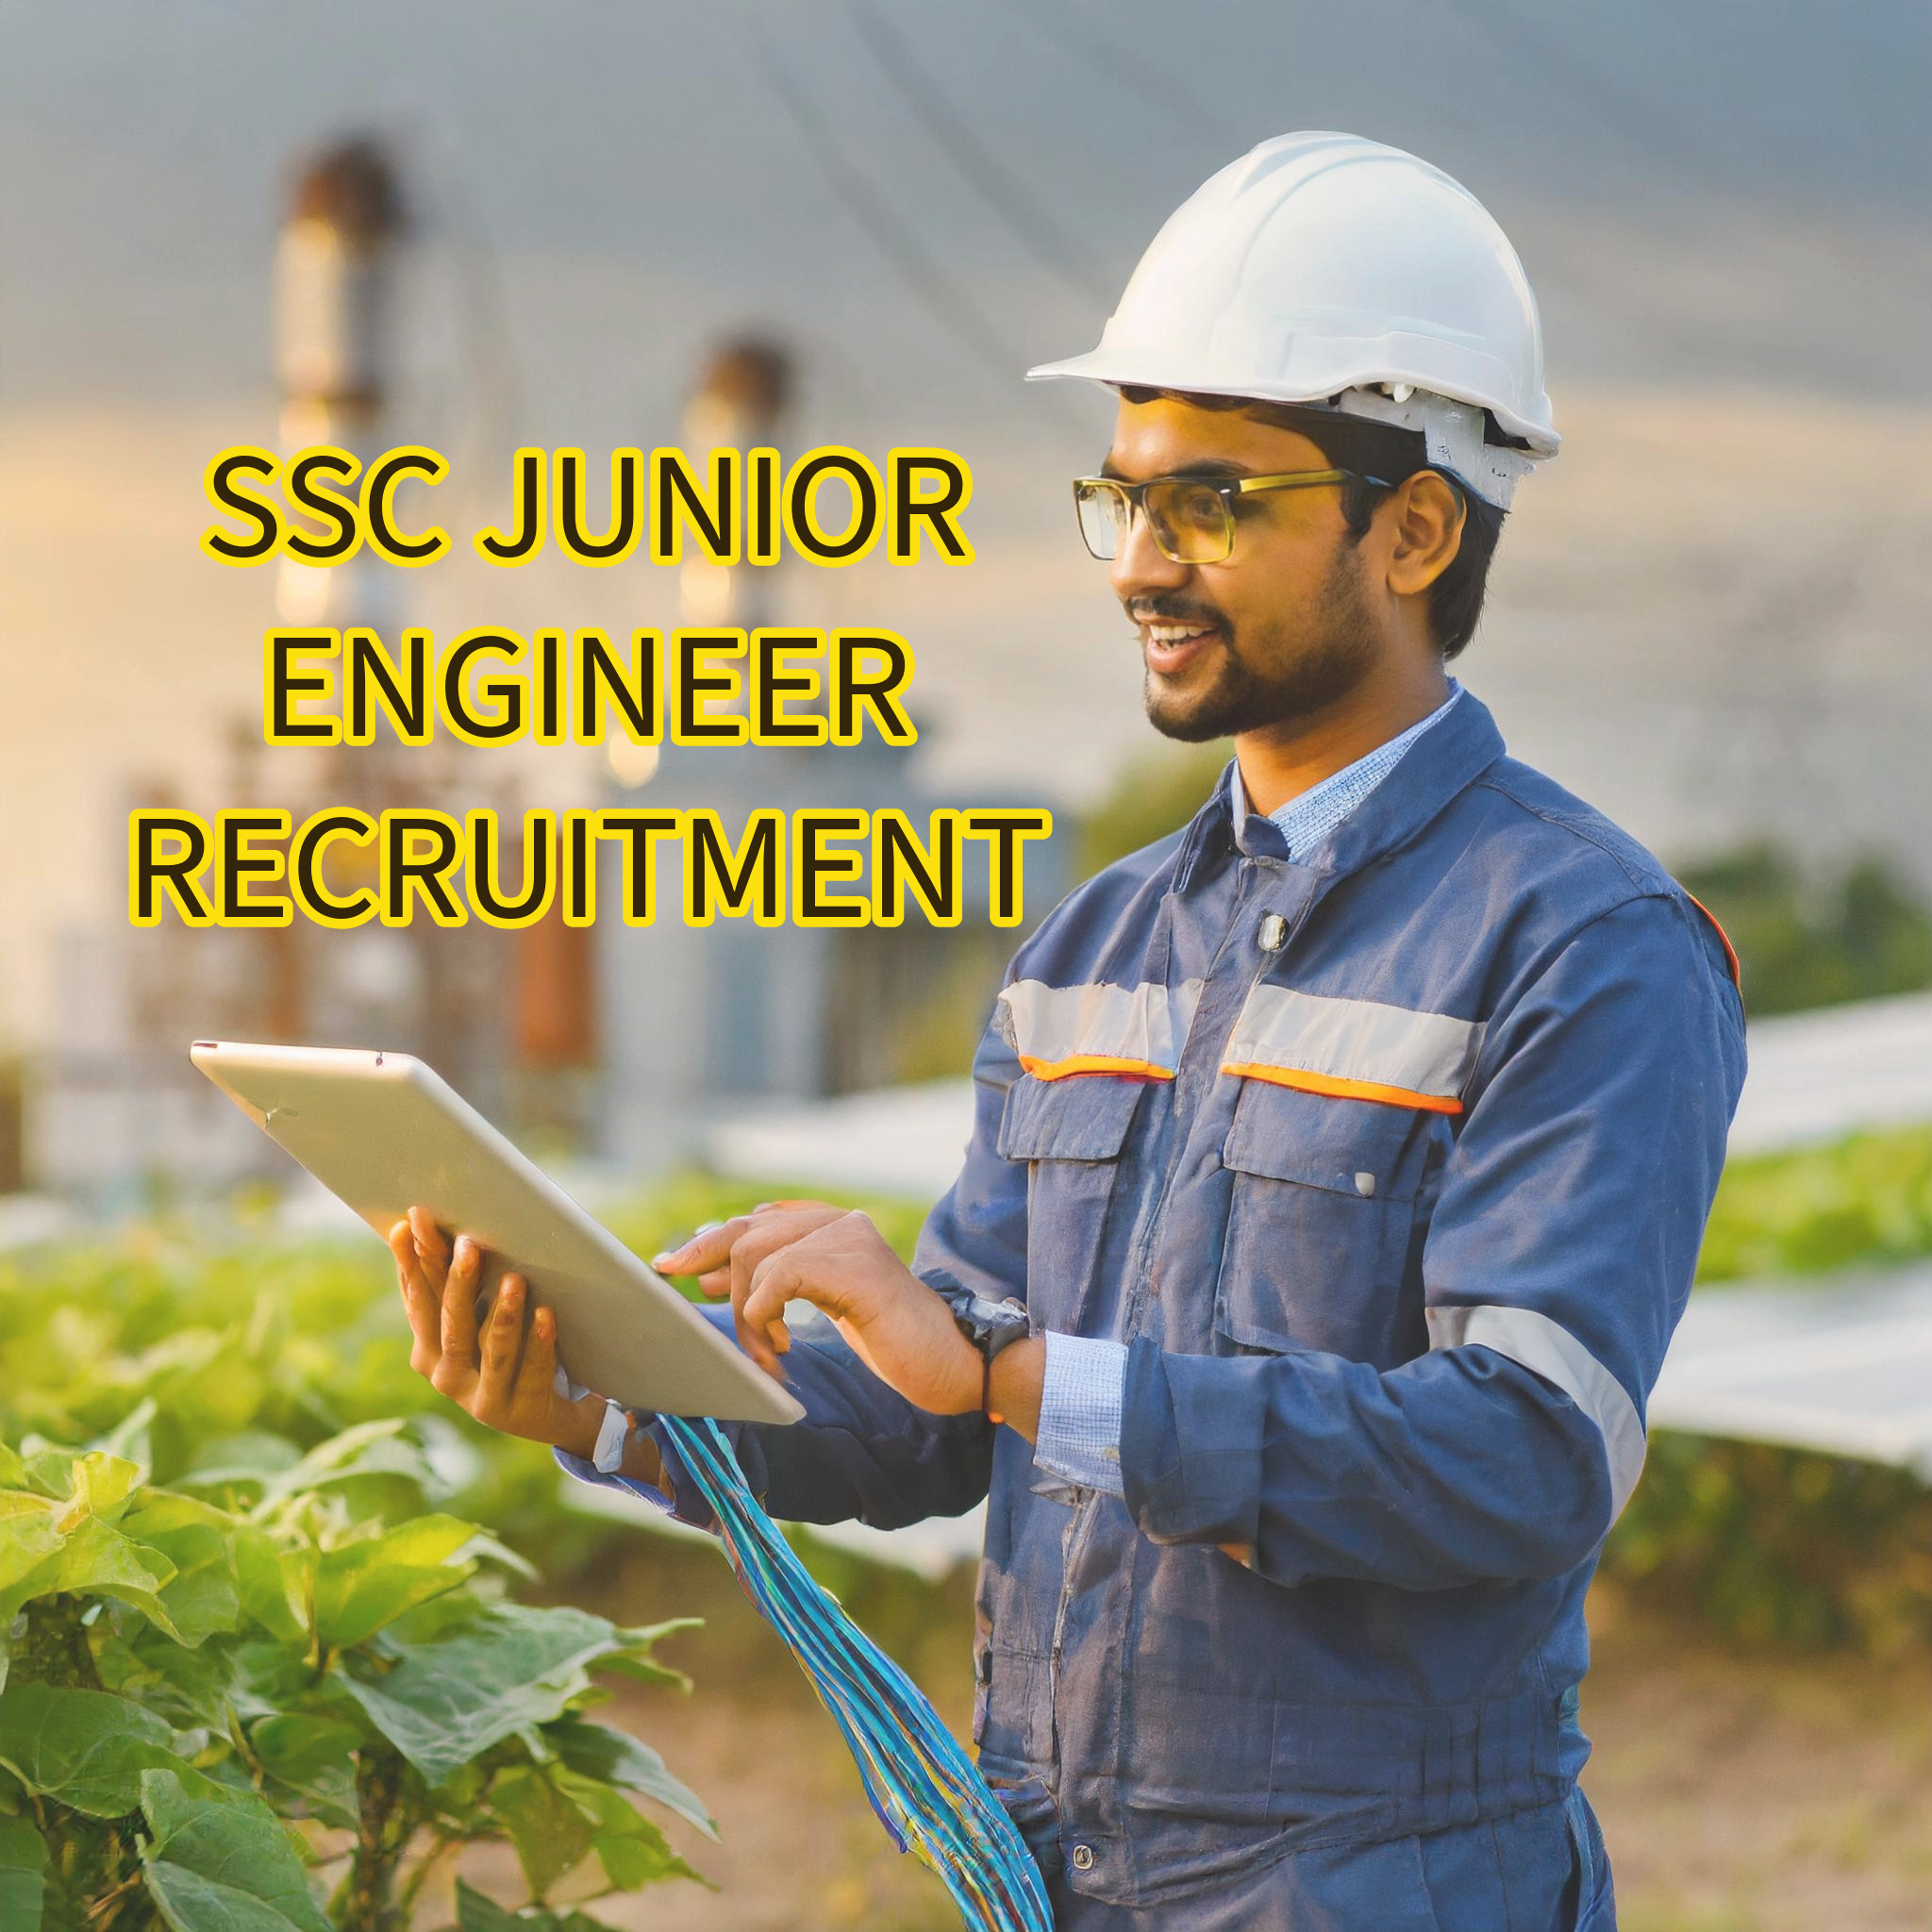 SSC RECRUITMENT FOR JUNIOR ENGINEER POSTS